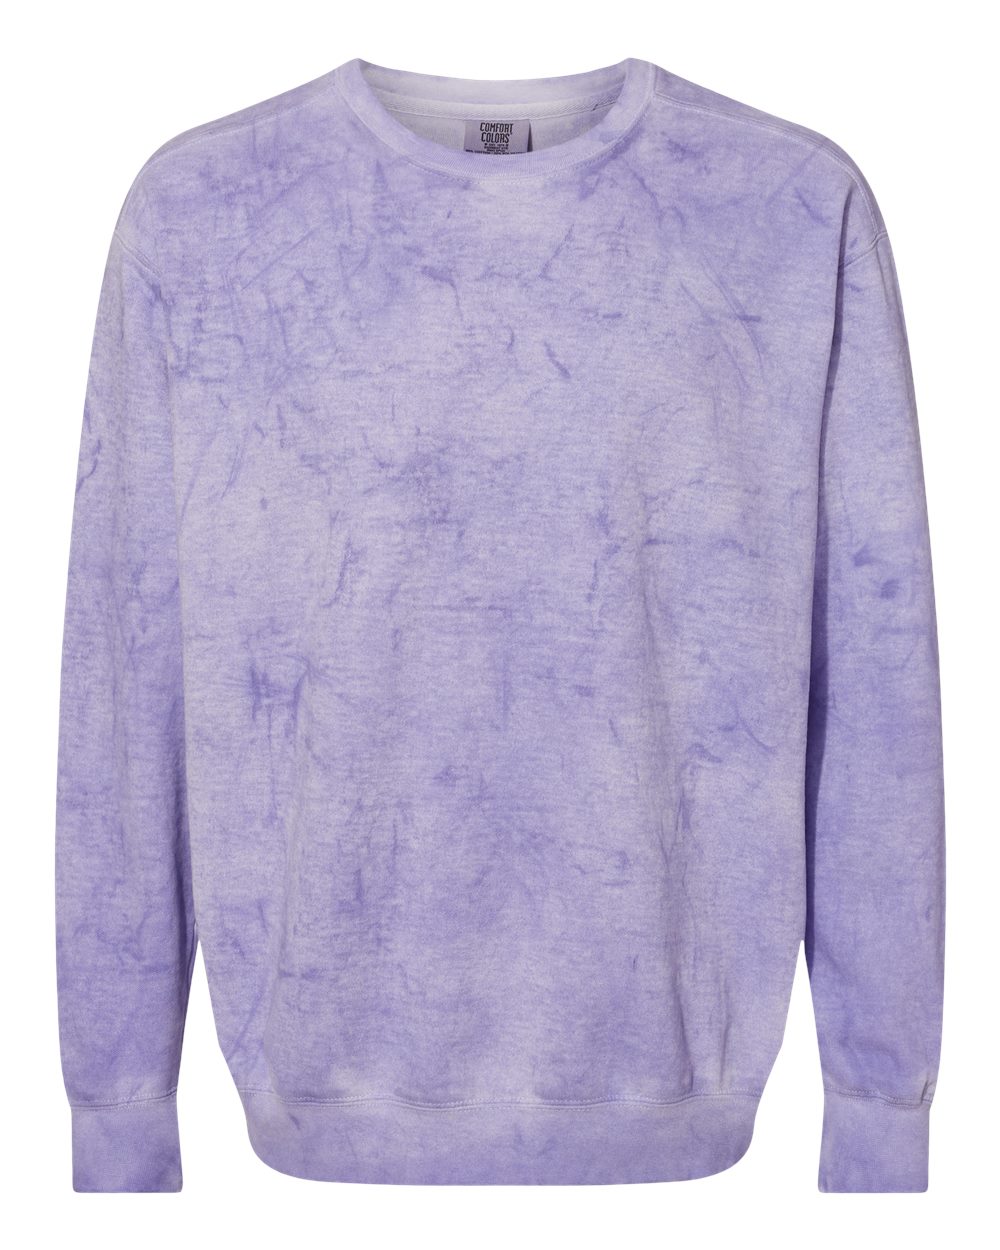 Wow Factor Comfort Colors Color Blast Sweatshirt/ Adult Sizes Only – Pink  Mustache Boutique